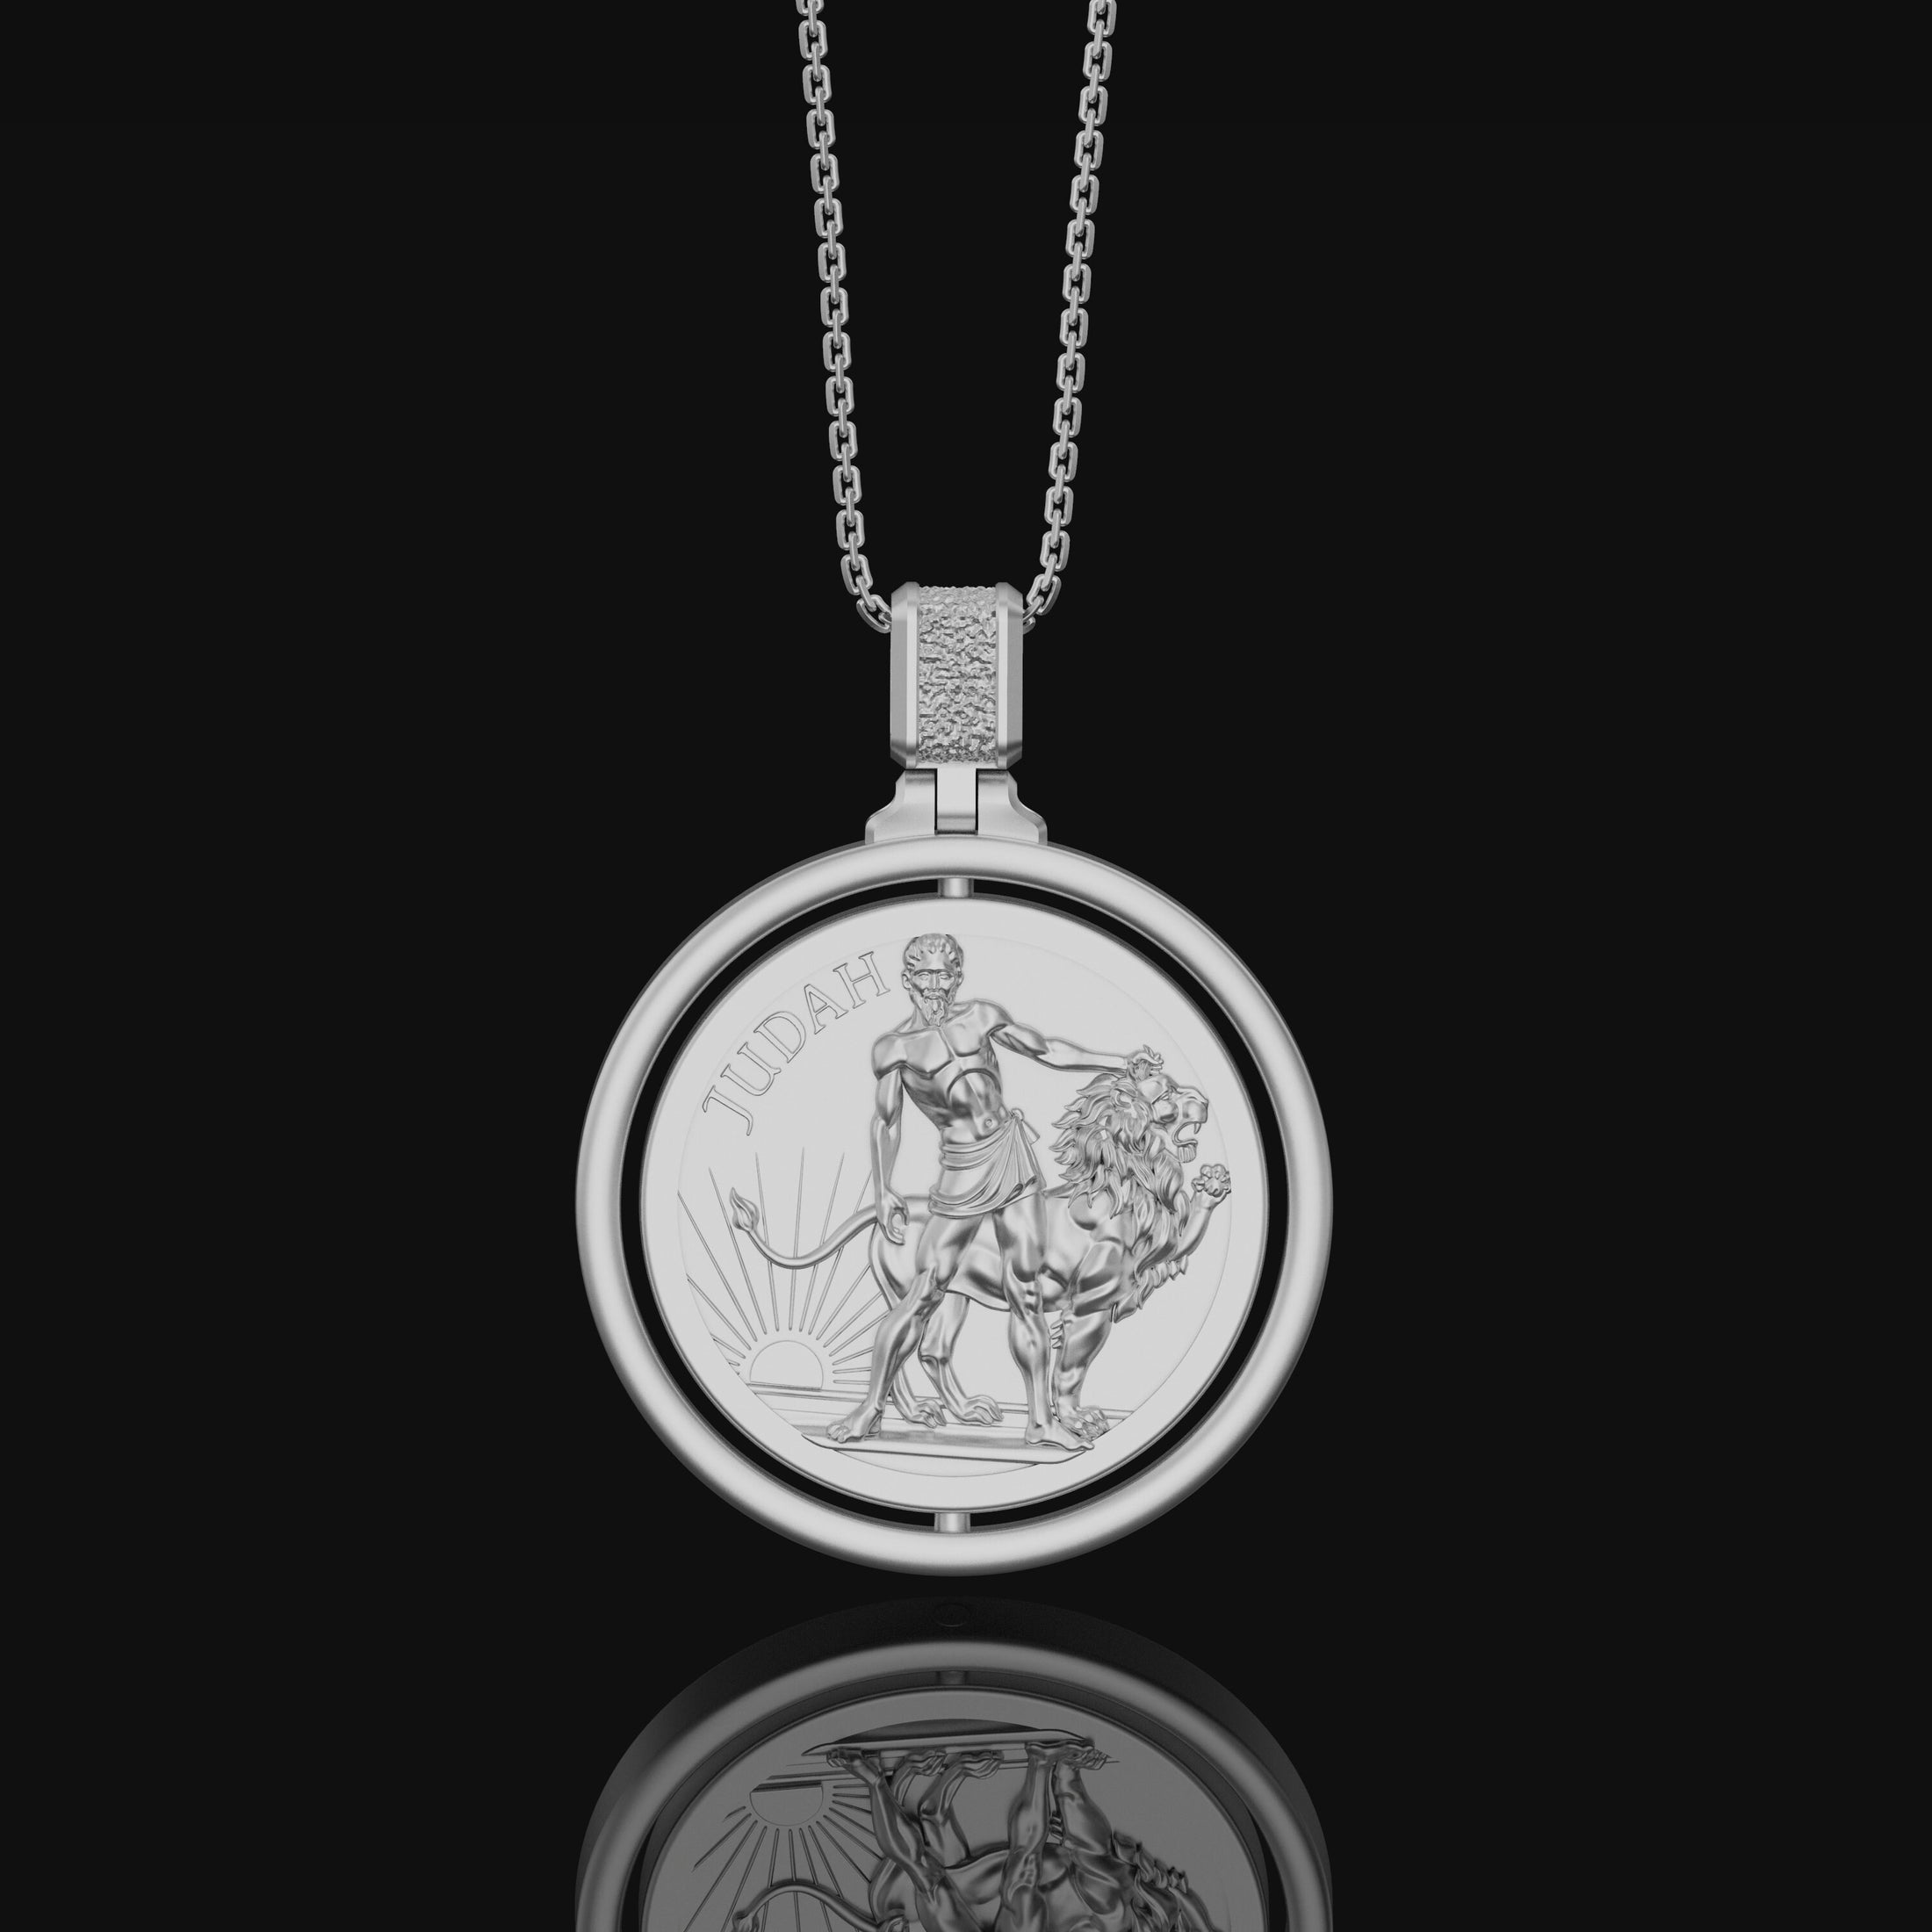 Lion of Judah, Kingdom of Judah, Jerusalem Emblem, Christian Necklace, Christian Symbol, Medallion, Rotating Pendant, Personalized Gift